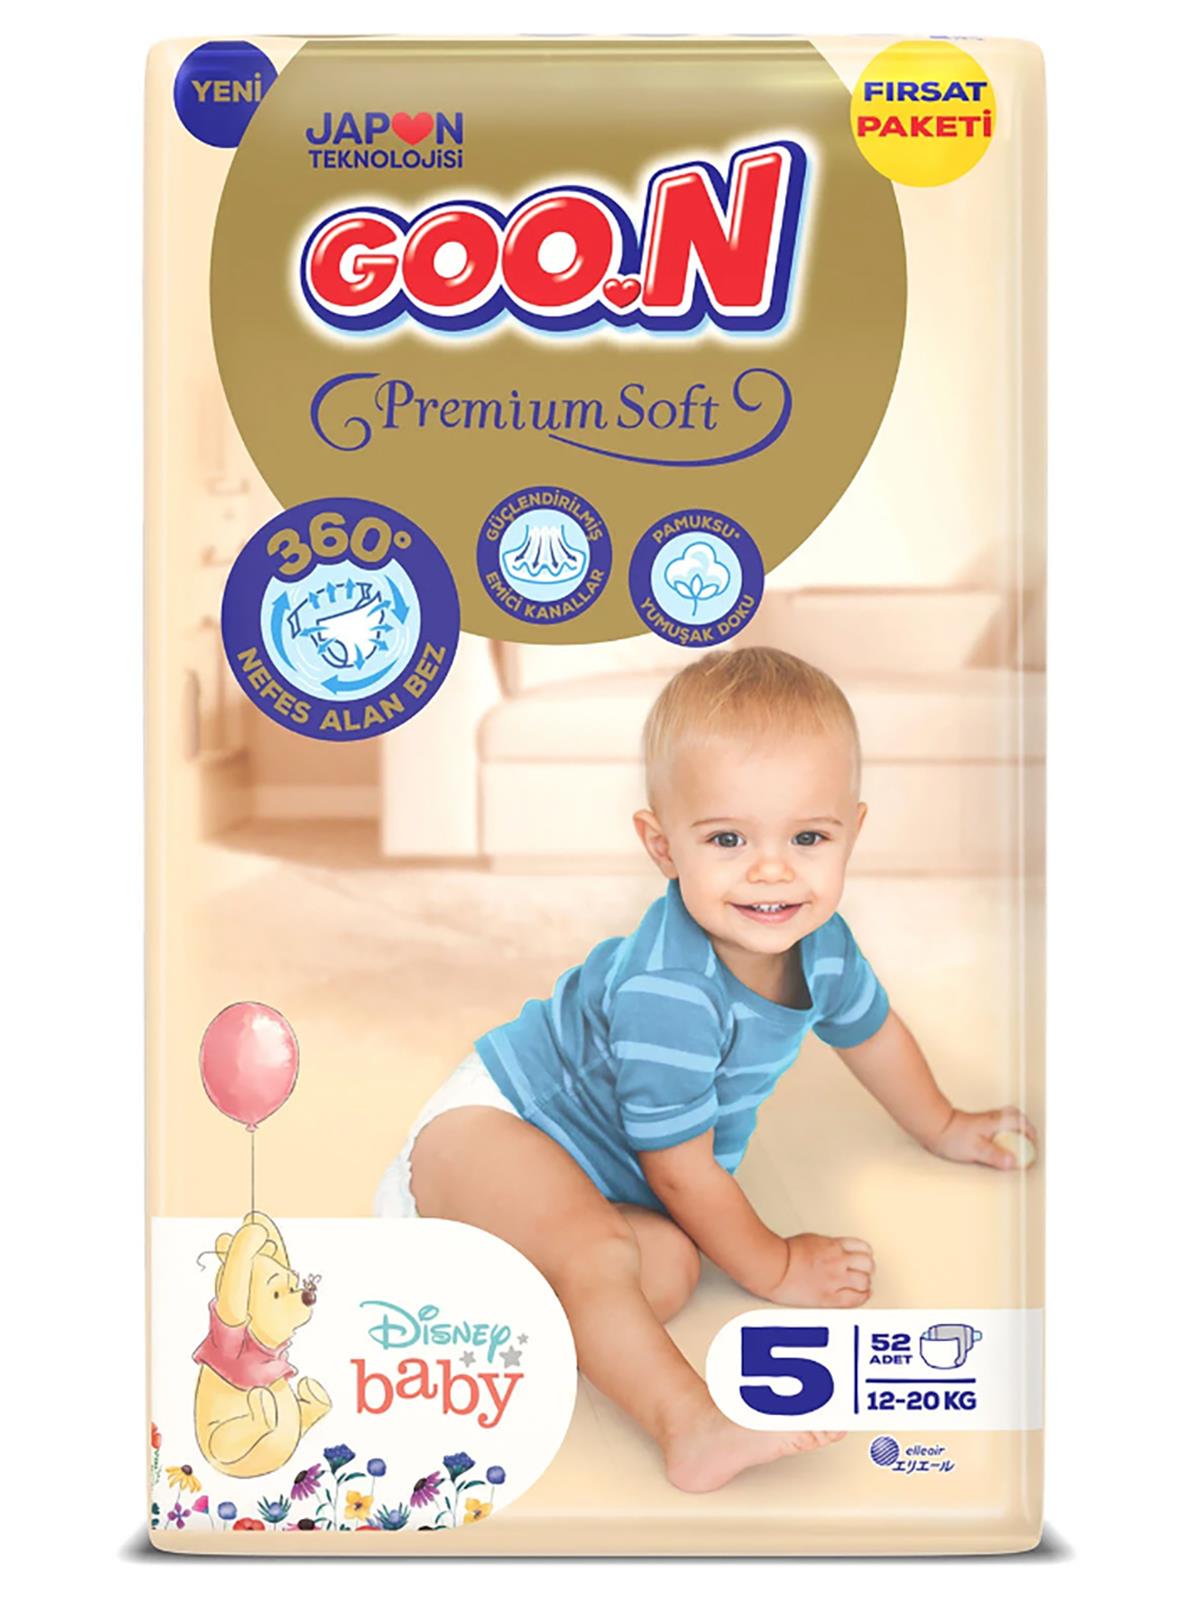 Goon Bebek Bezi Premium Soft 5 Beden Fırsat Paketi 52 Adet 12-20 kg